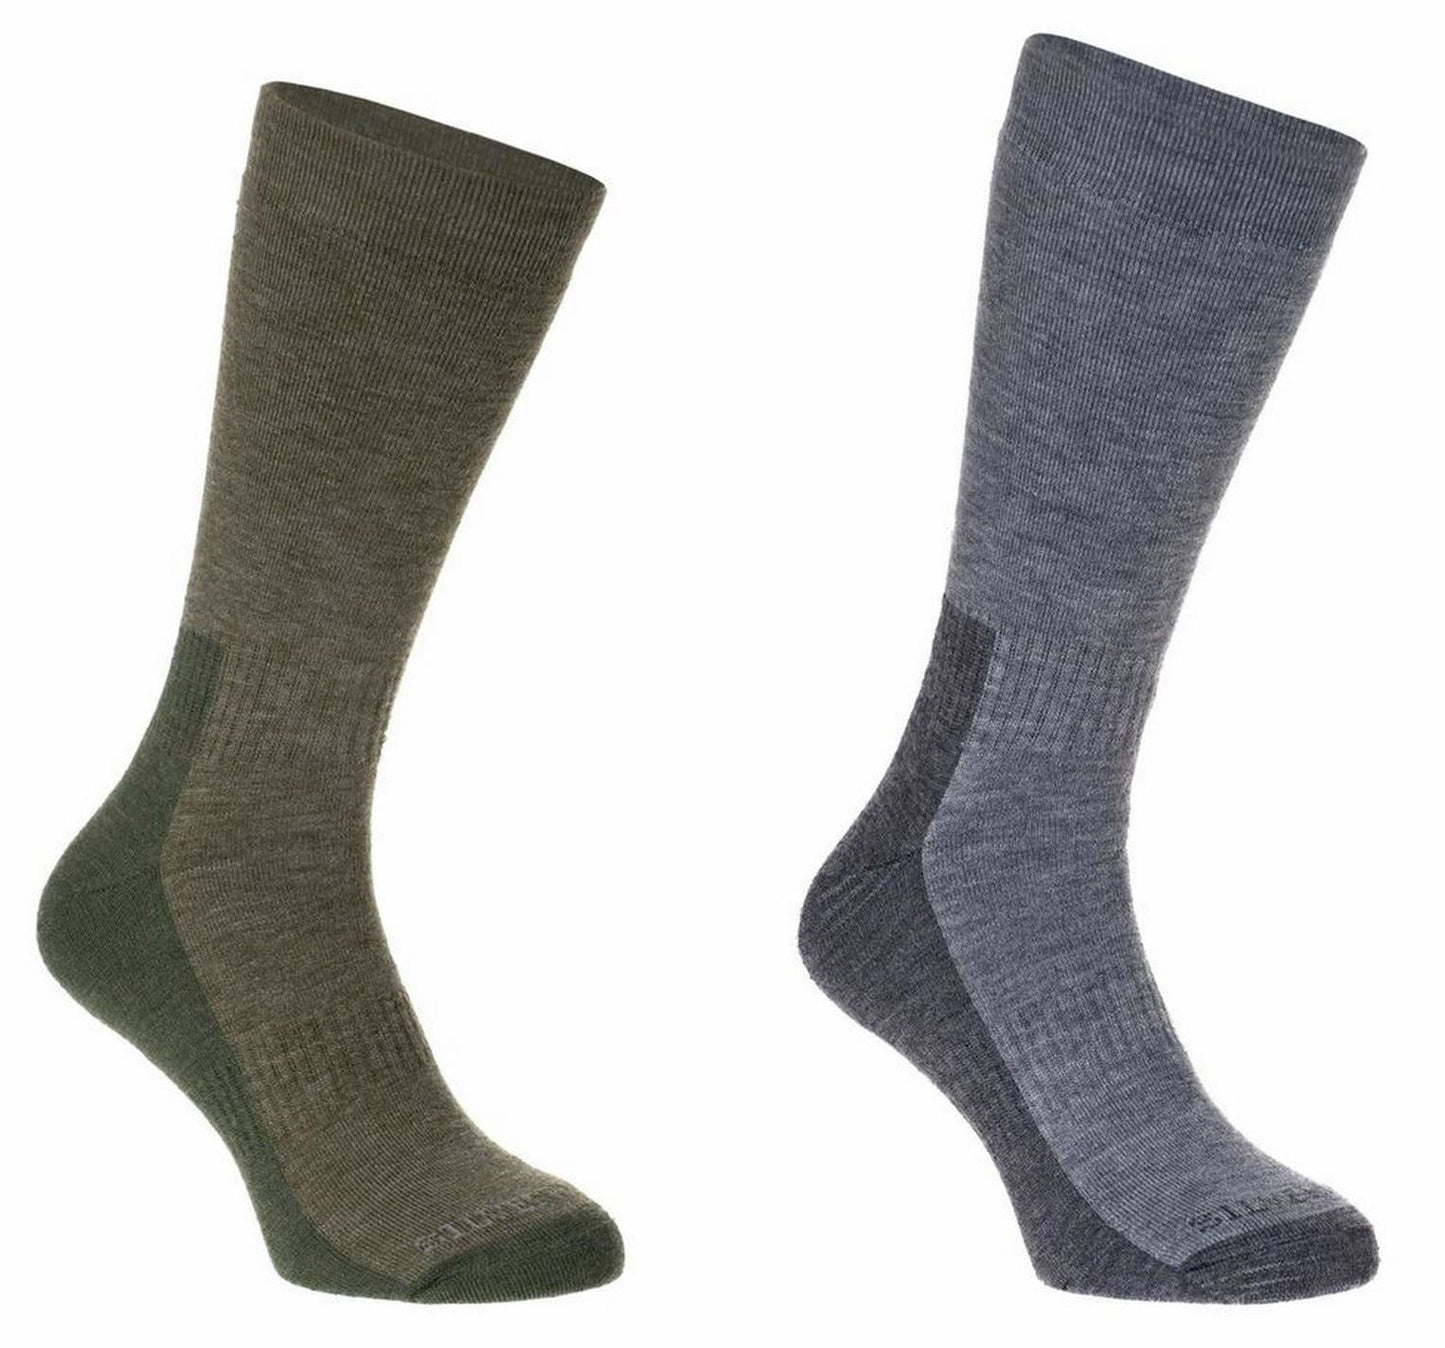 Mens Merino Wool All Terrain Hiking Socks Twin Pack - Choose Size